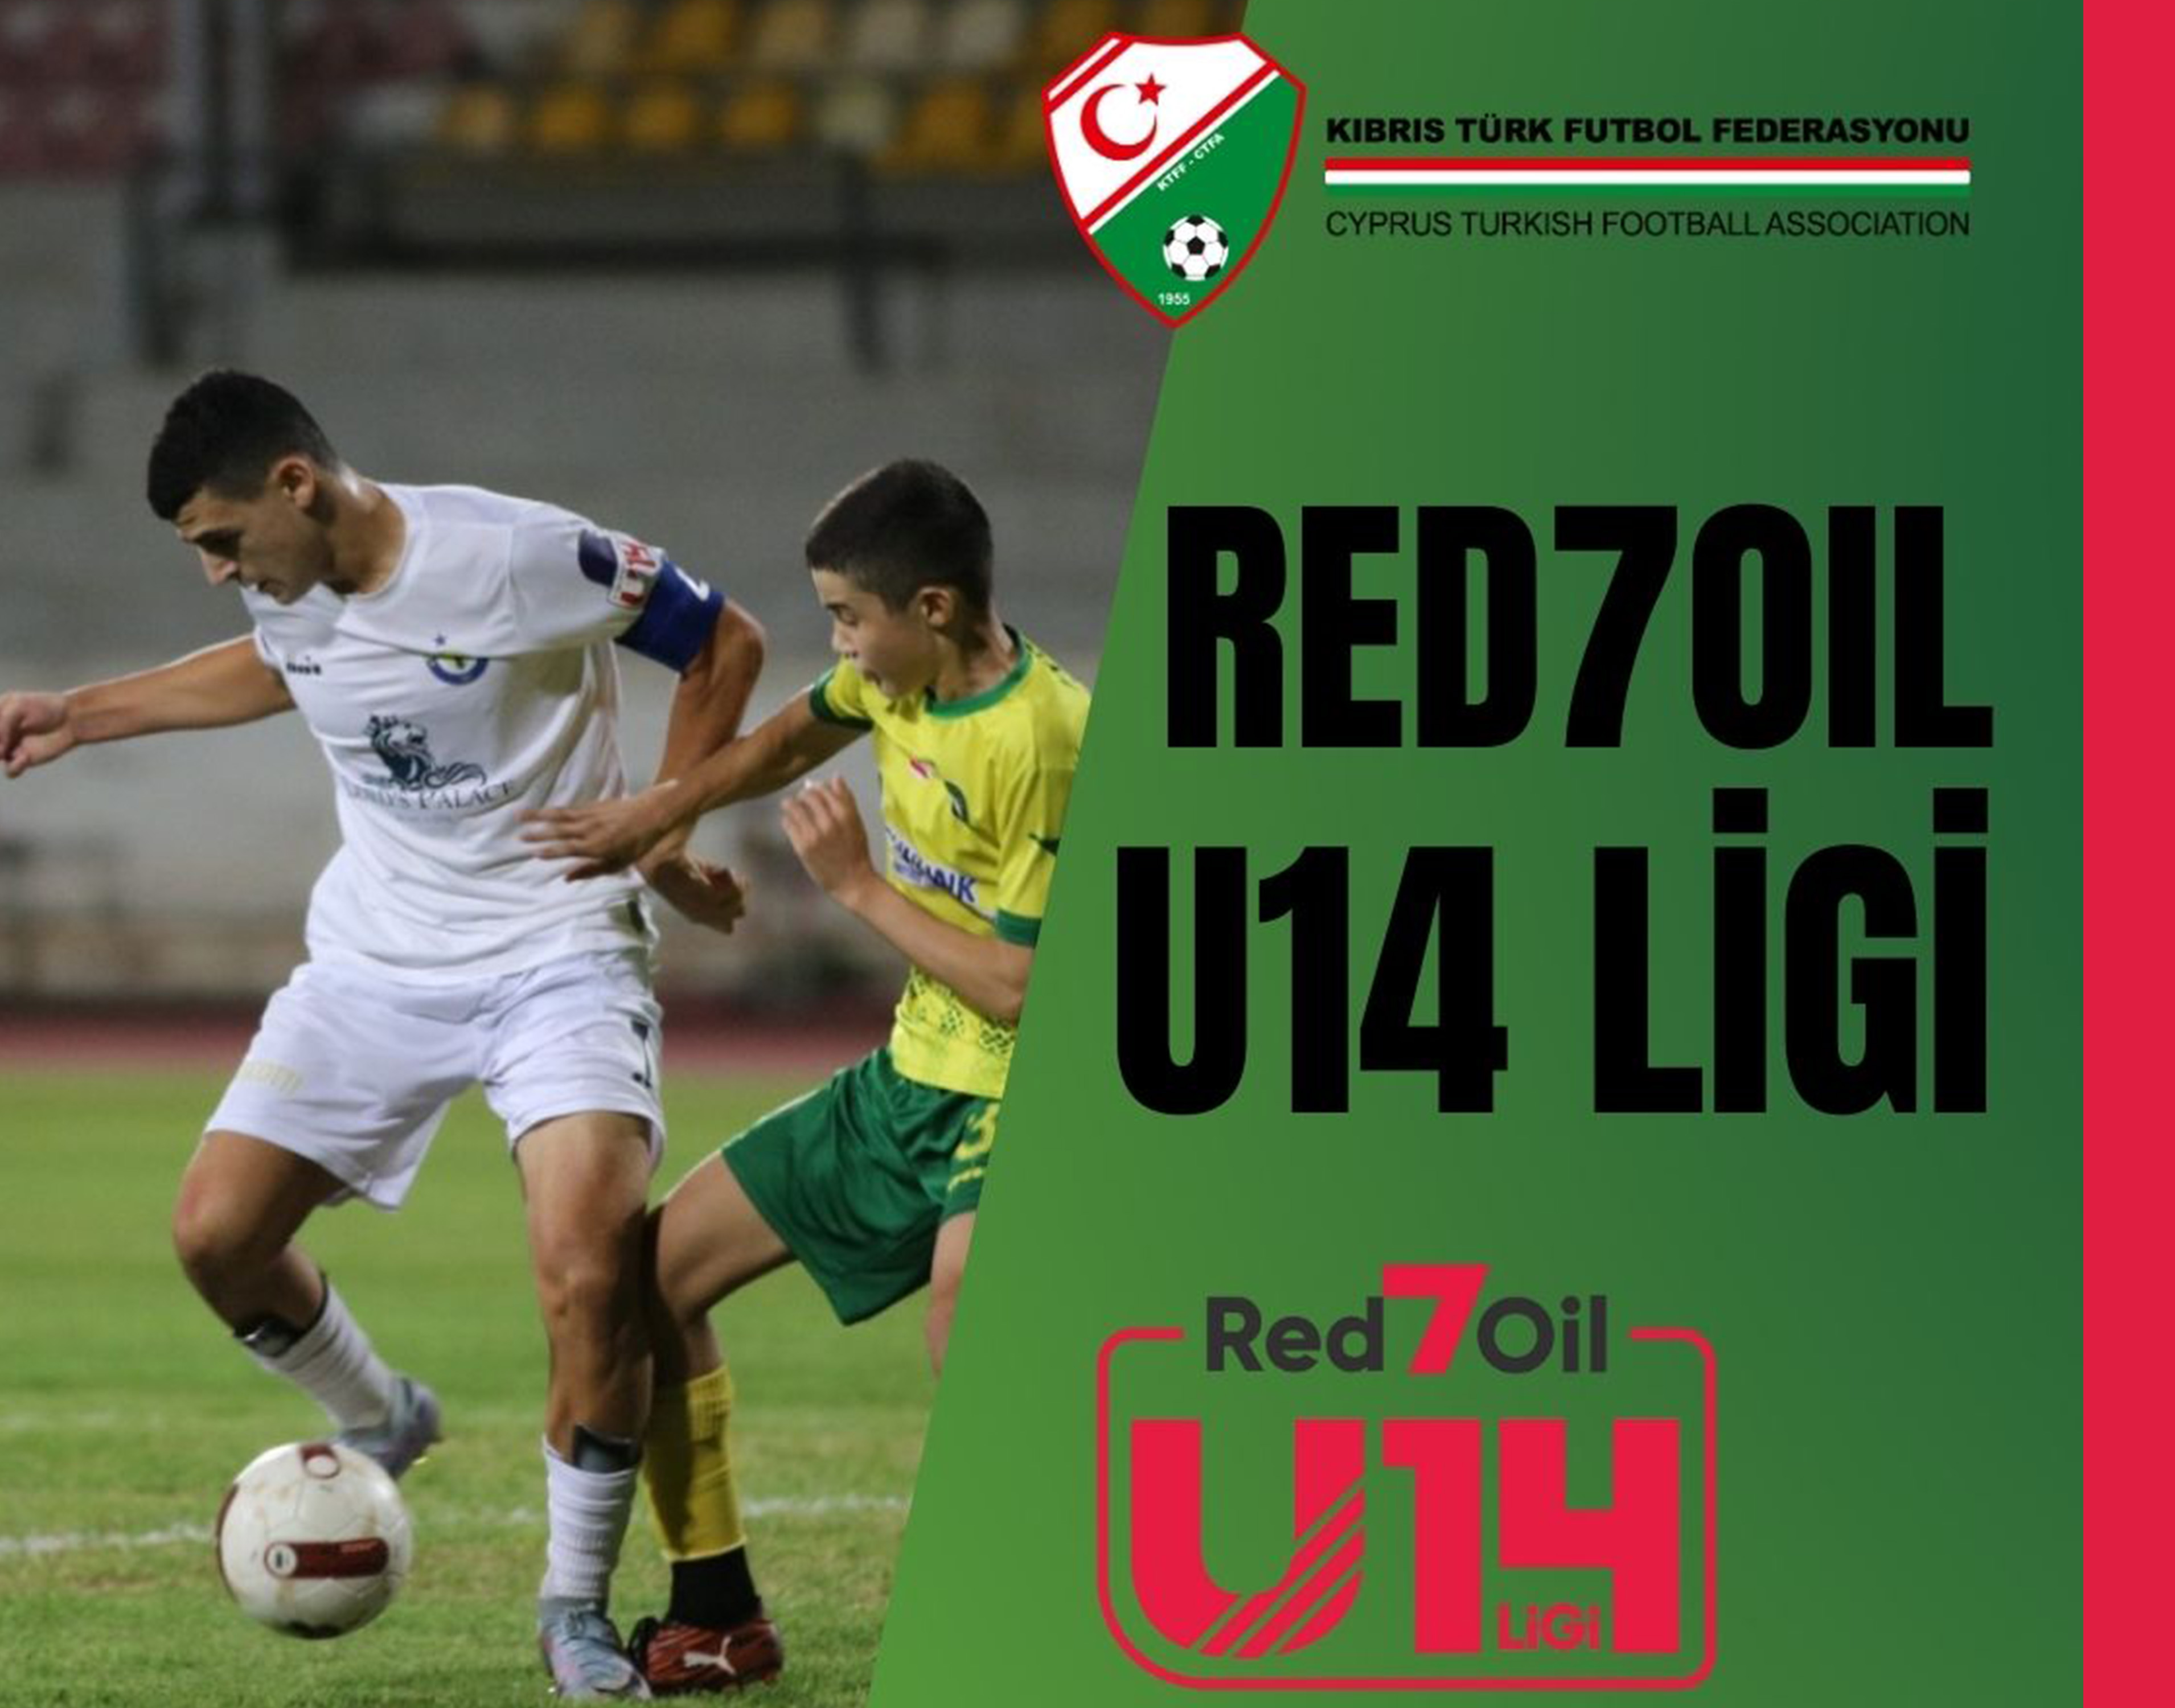 Red7Oil U14 Ligi'nde fikstür çekiliyor